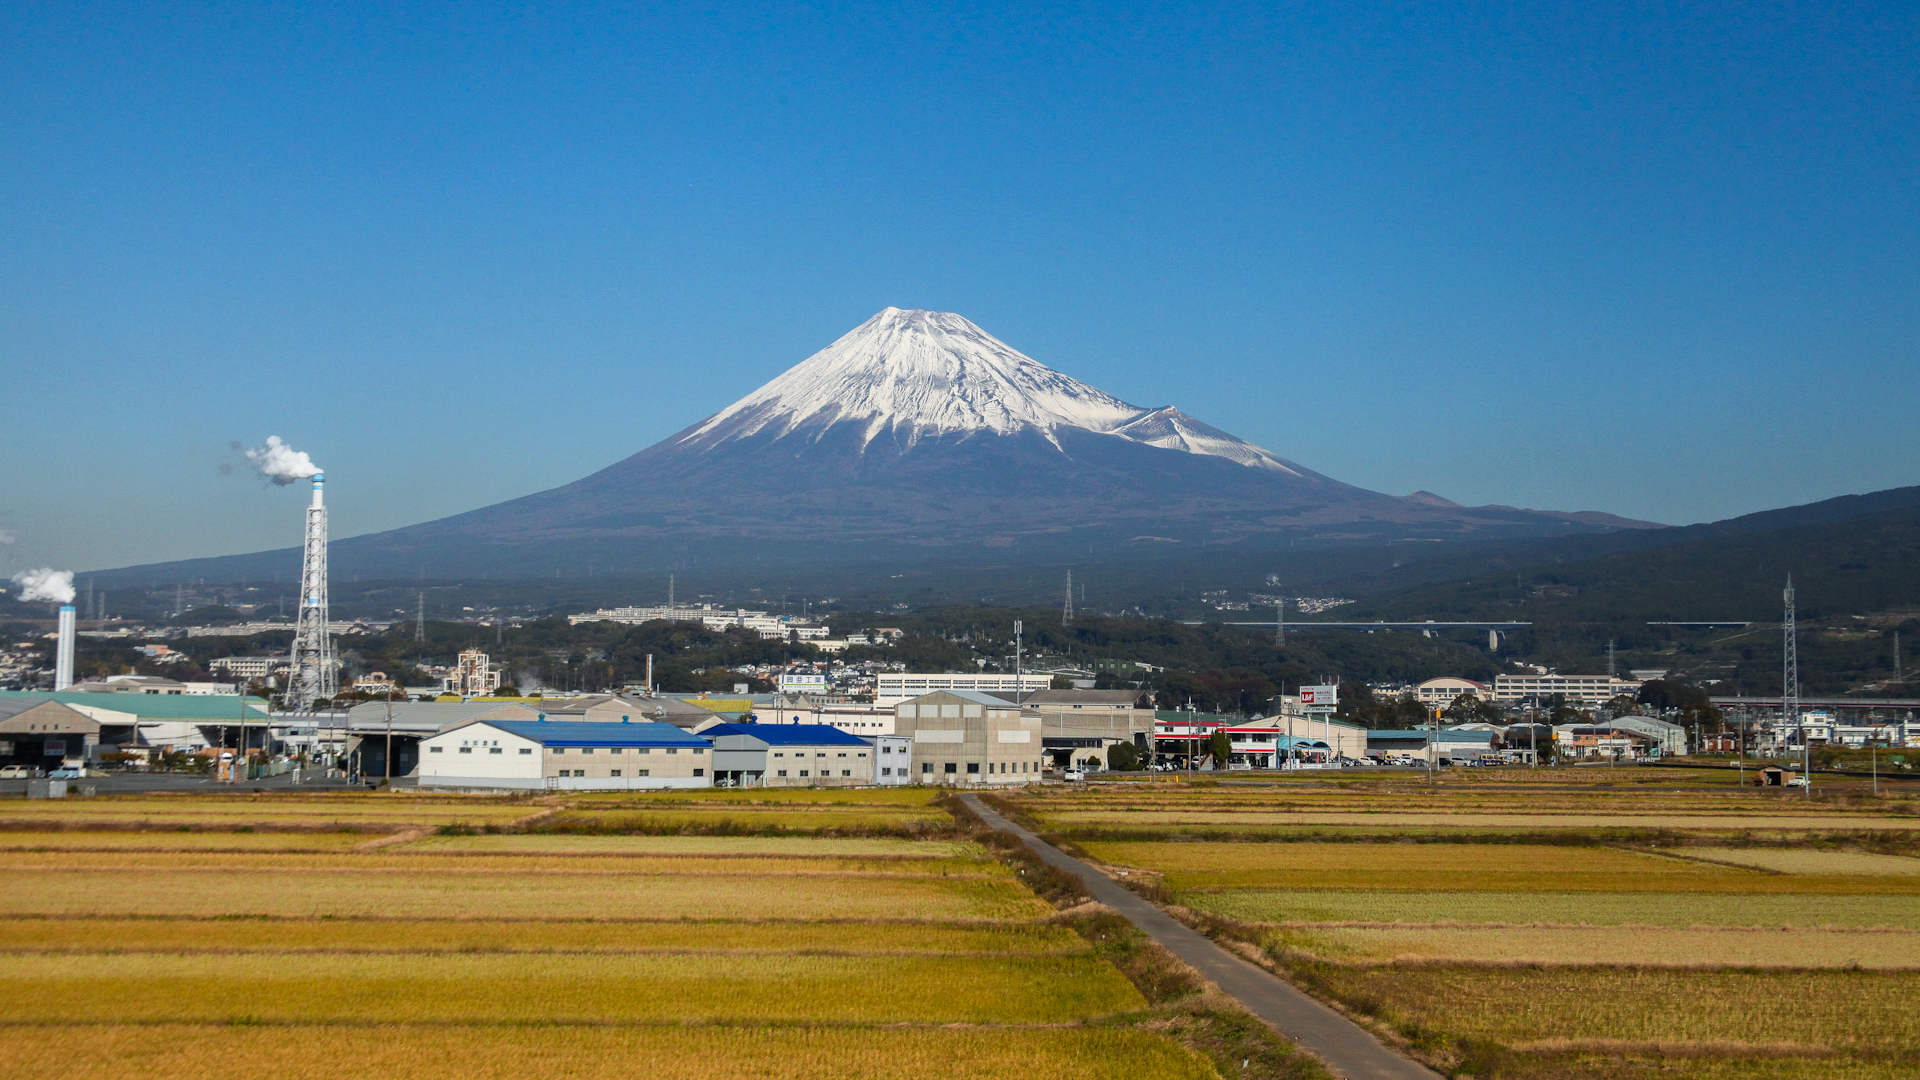 Robert Lichtenauer - Mount Fuji from the Shinkansen